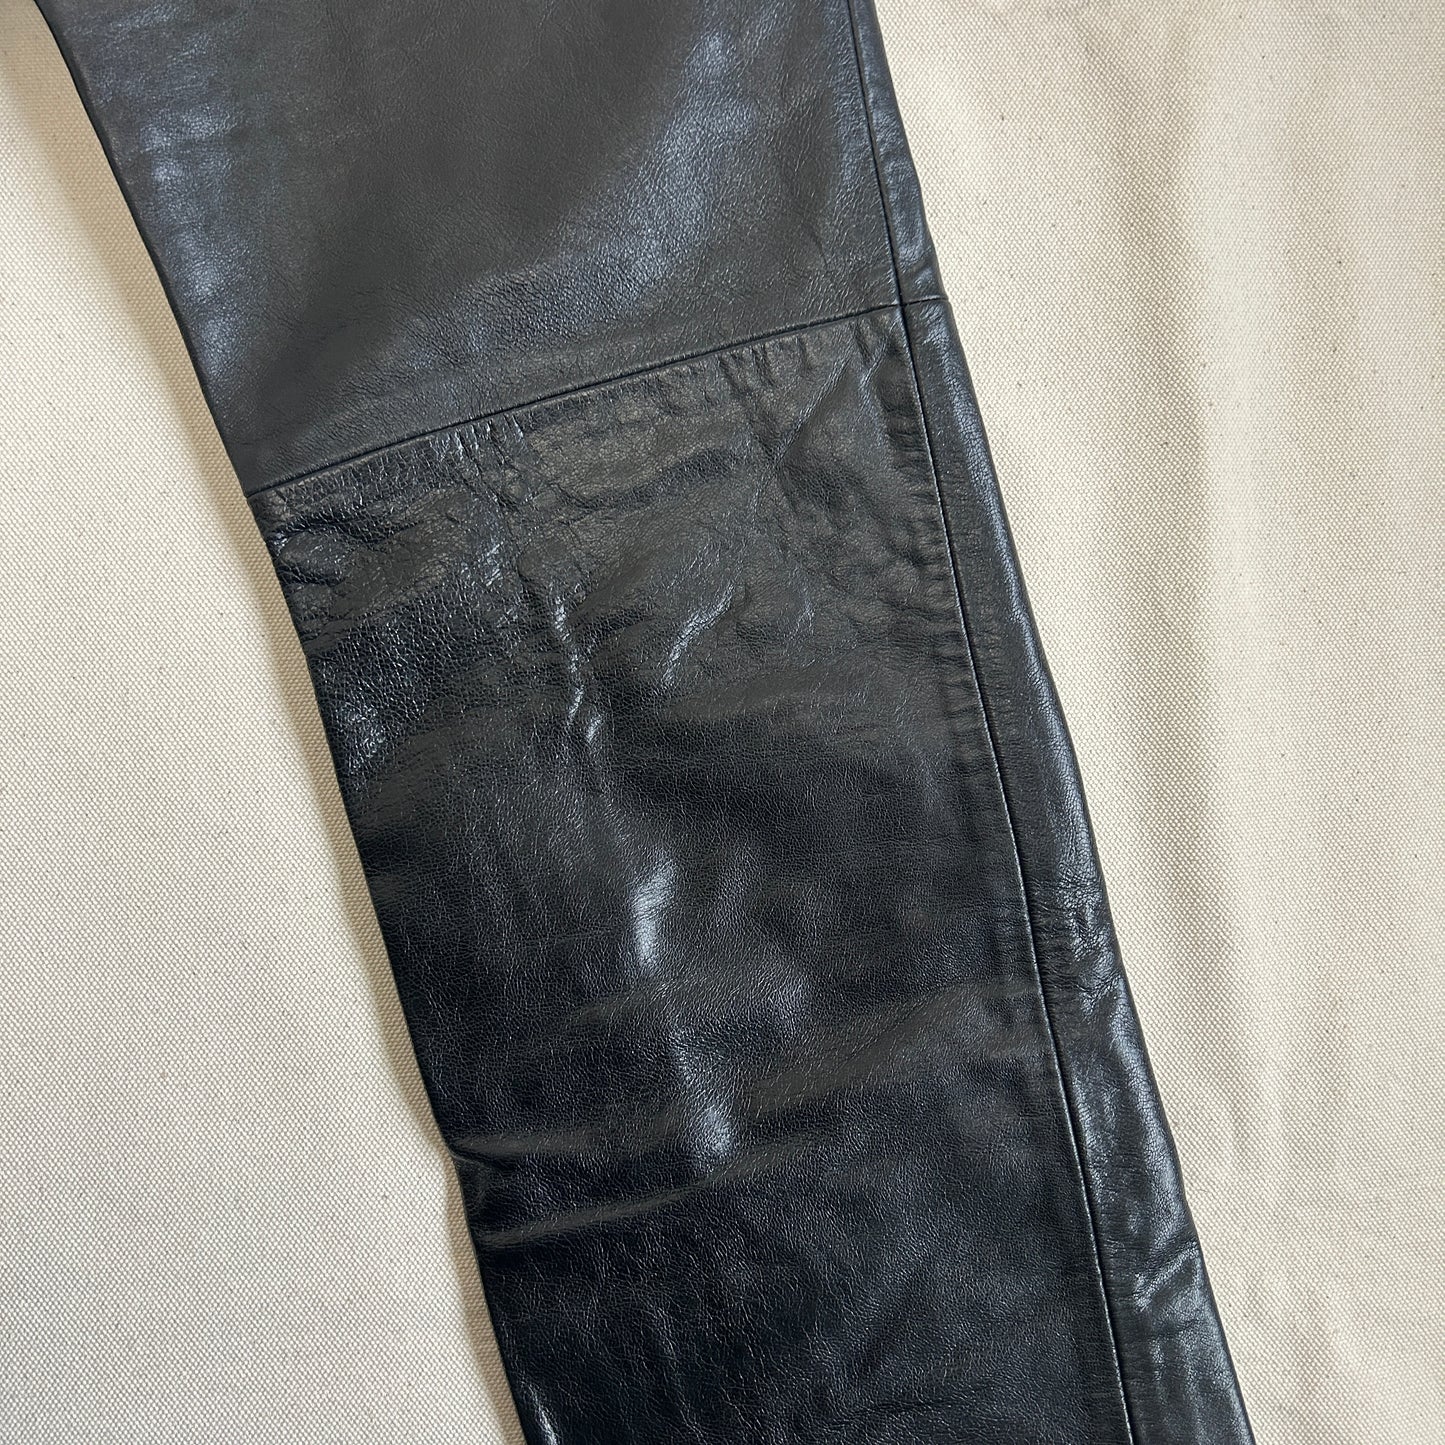 YOSHIYUKI KONISHI Straight Leather Pants